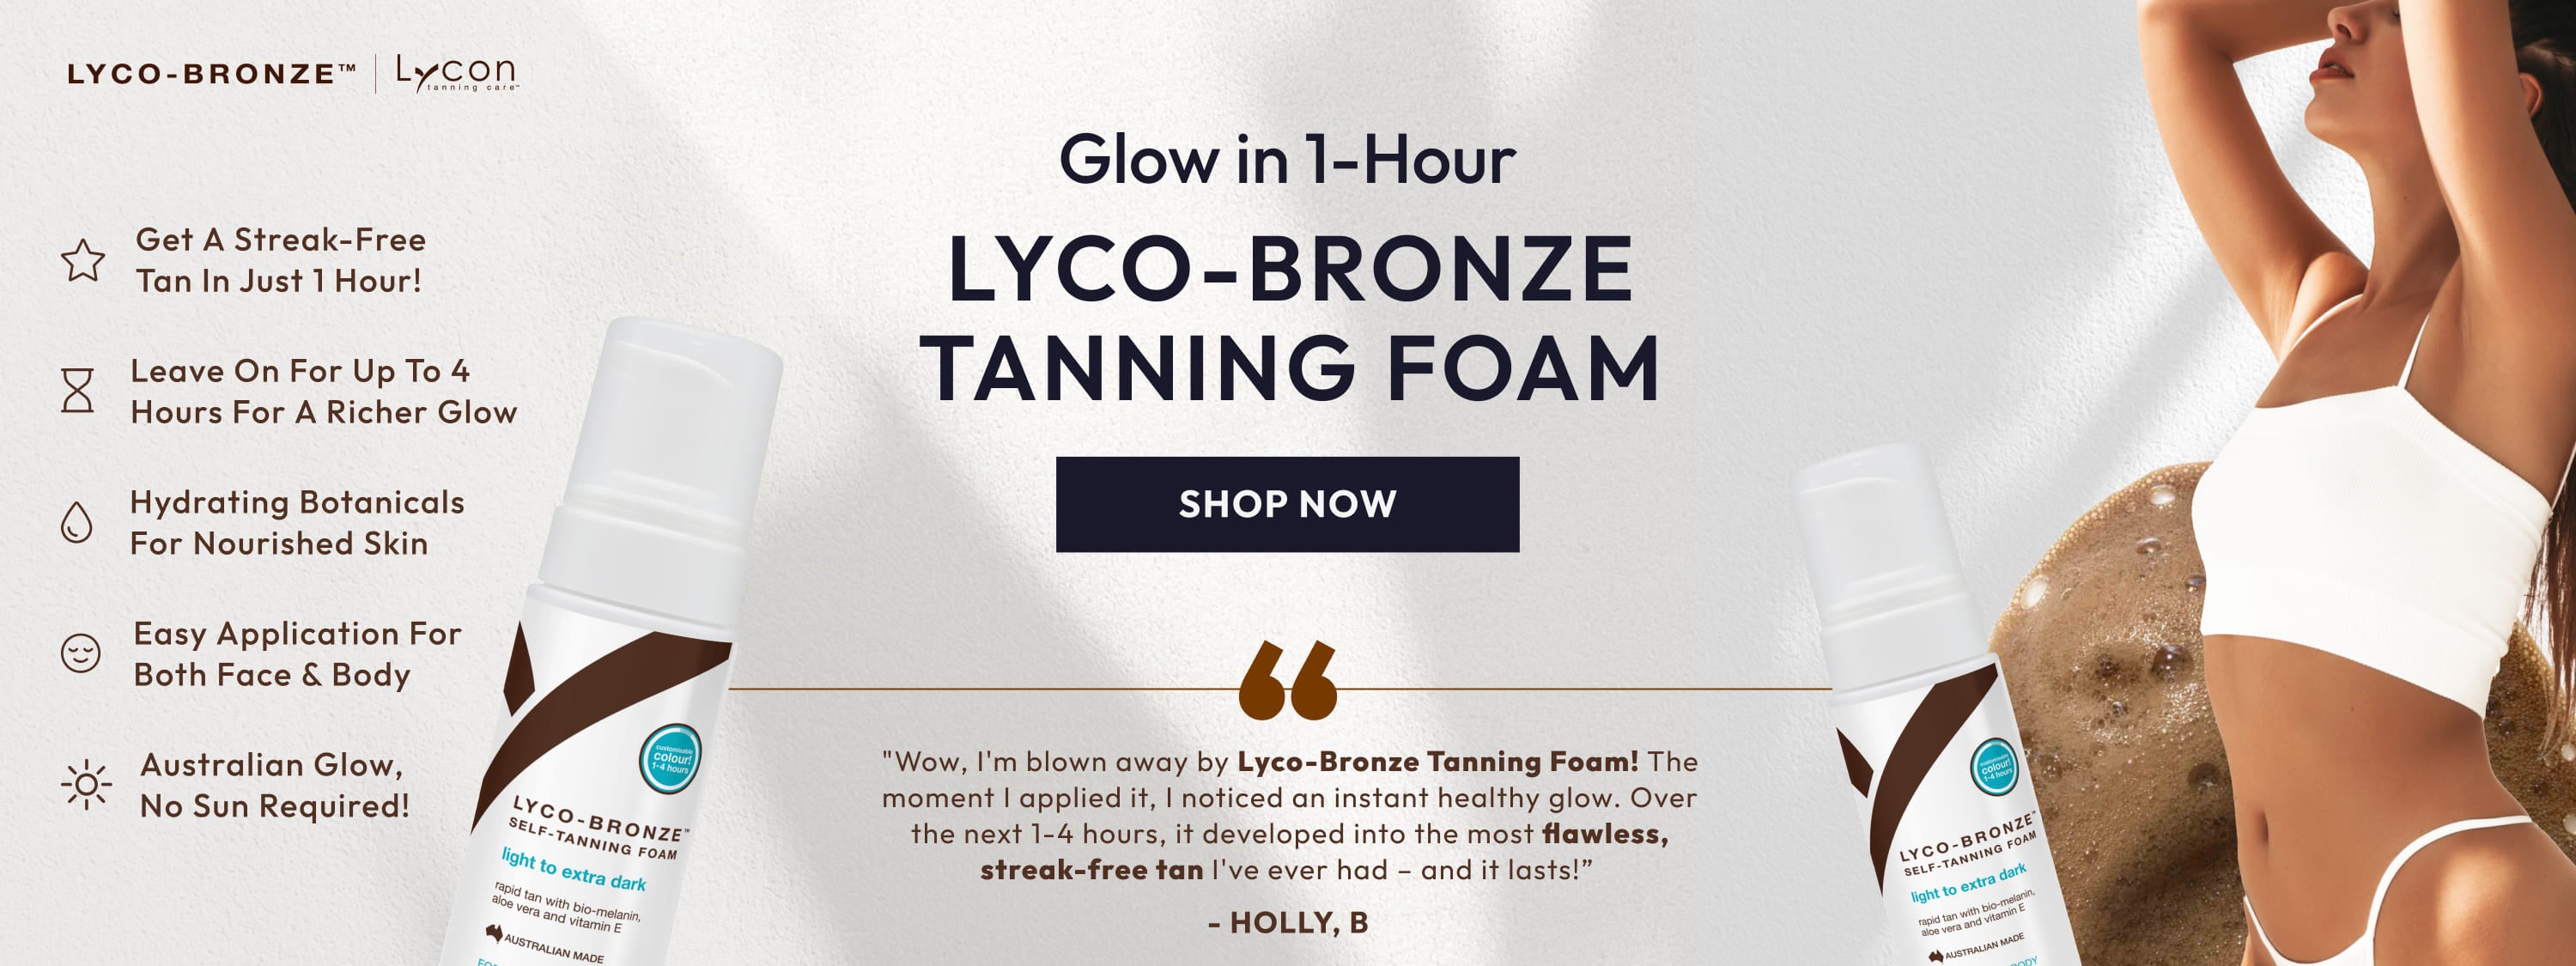 Lyco-Bronze Tanning Foam